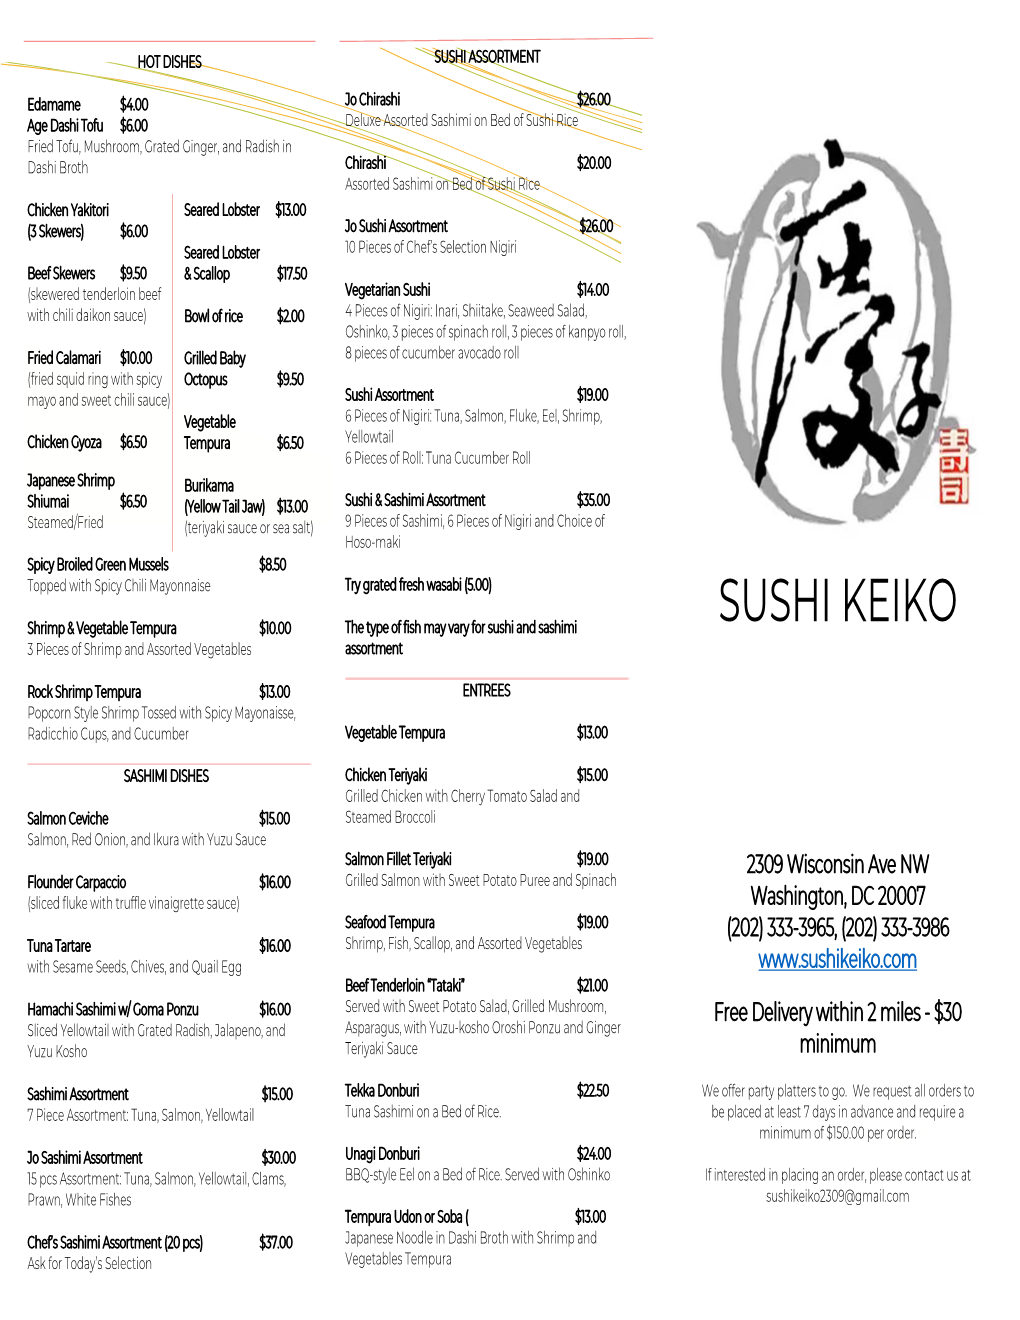 SUSHI KEIKO 3 Pieces of Shrimp and Assorted Vegetables Assortment